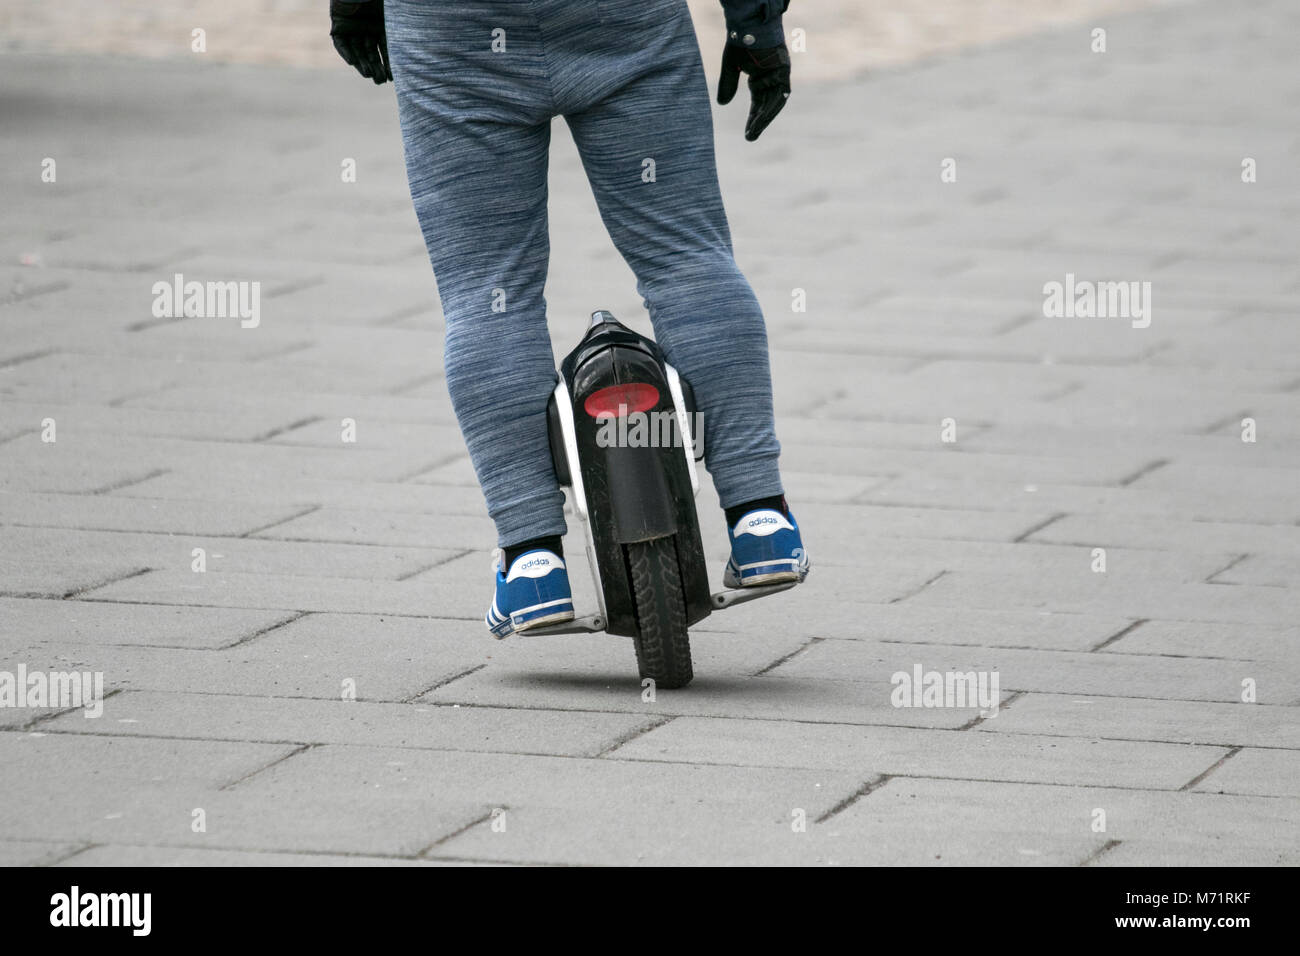 Electric one wheel mono scooter, unicycle self balance a balancing mode of transport, Liverpool city UK Stock Photo